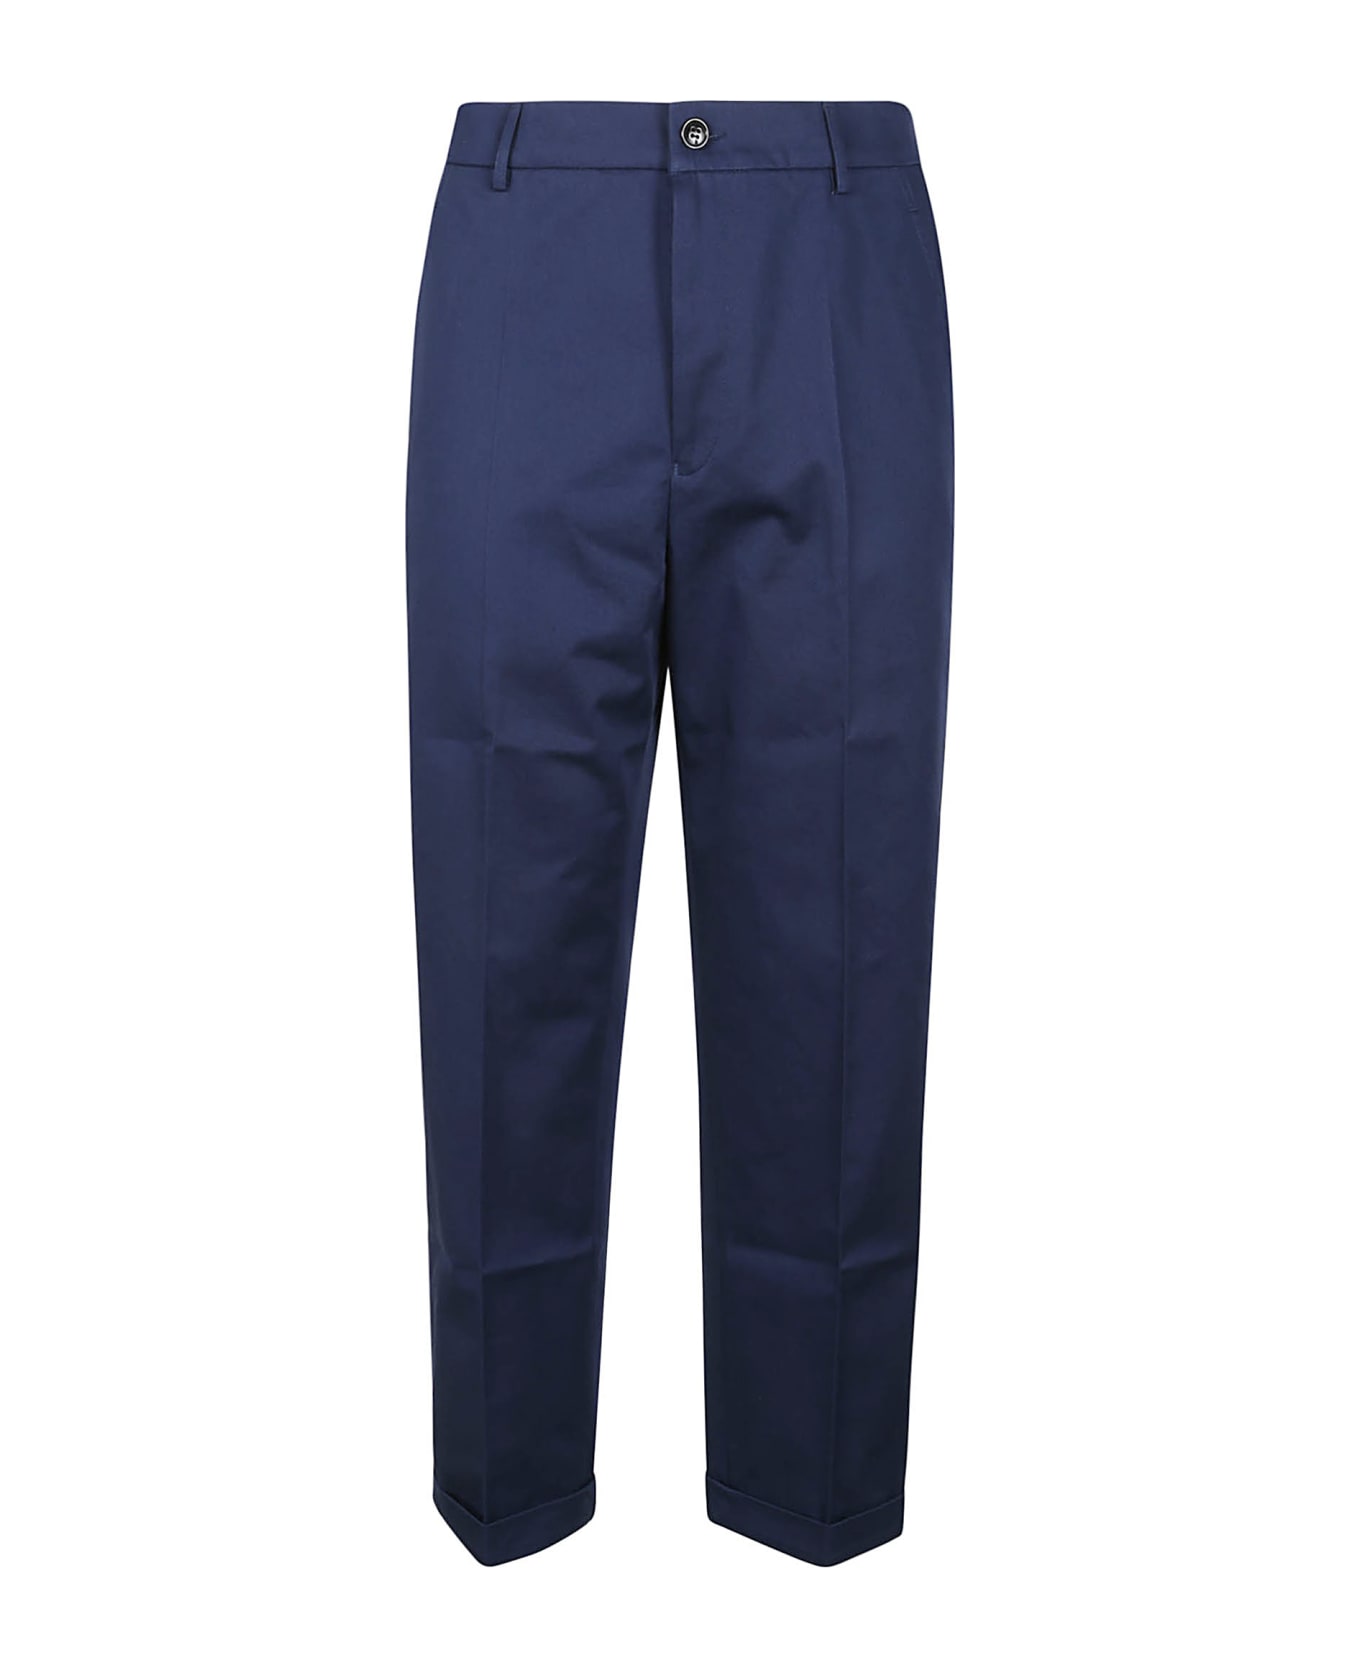 Kenzo Classic Chino Cotton Pants - Bleu Nuit